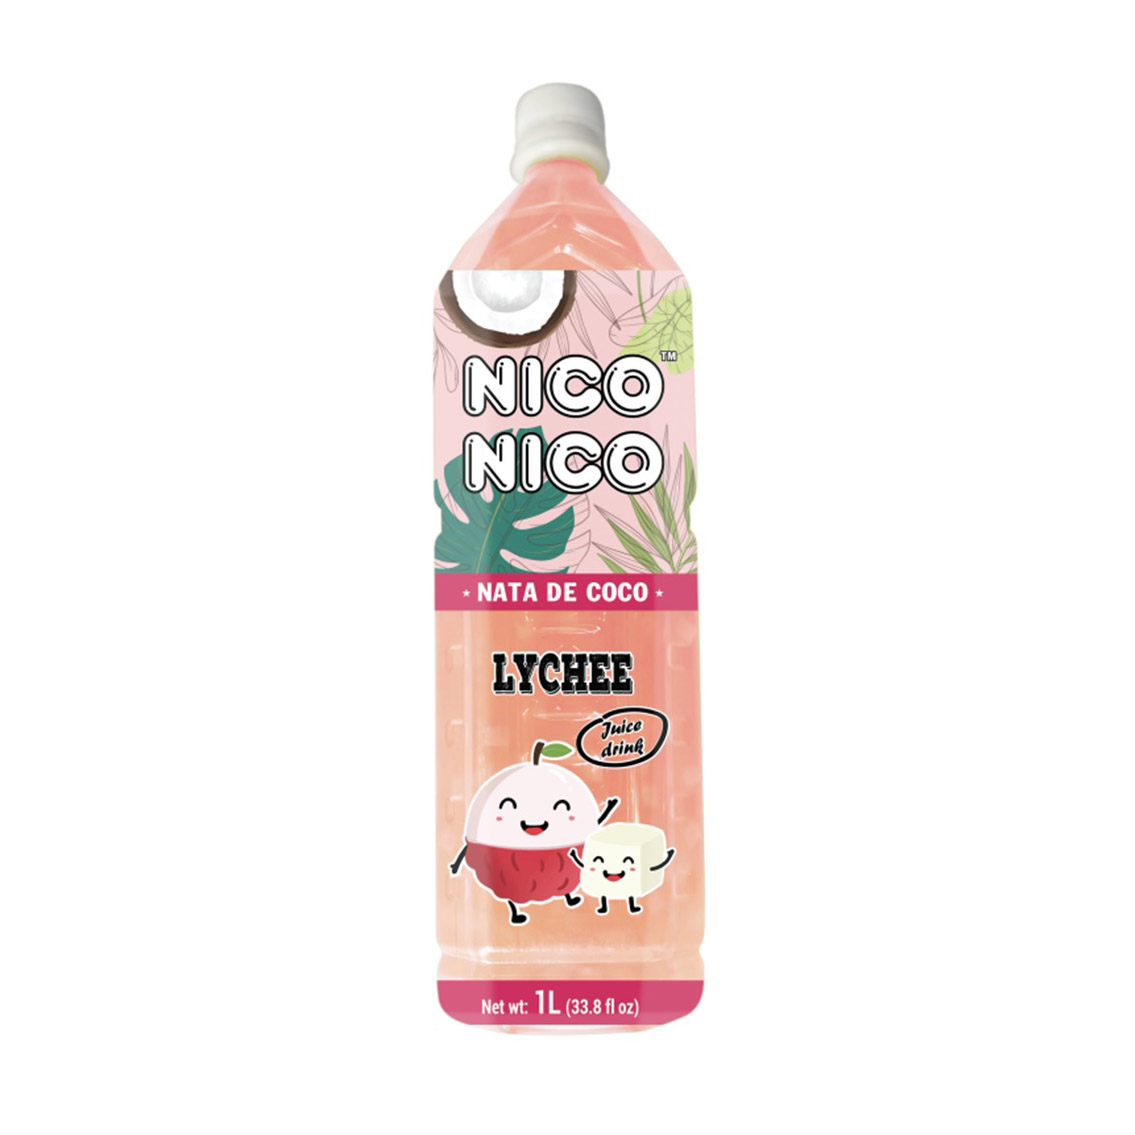 NICONICO NATADE COCO LYCHEE DRINK6/33.8Z